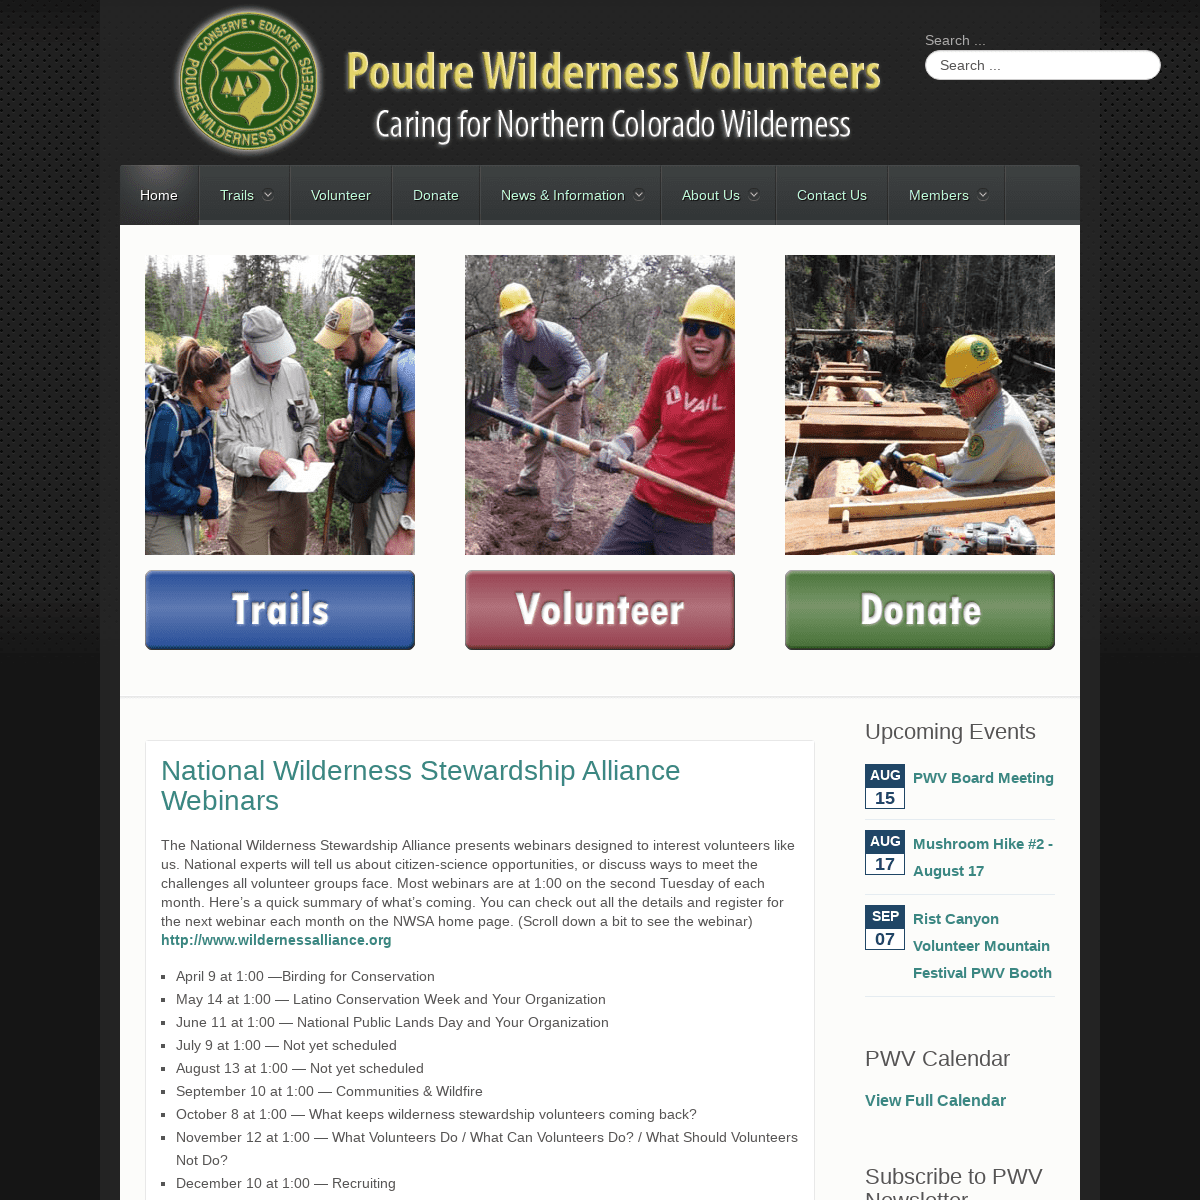 Poudre Wilderness Volunteers